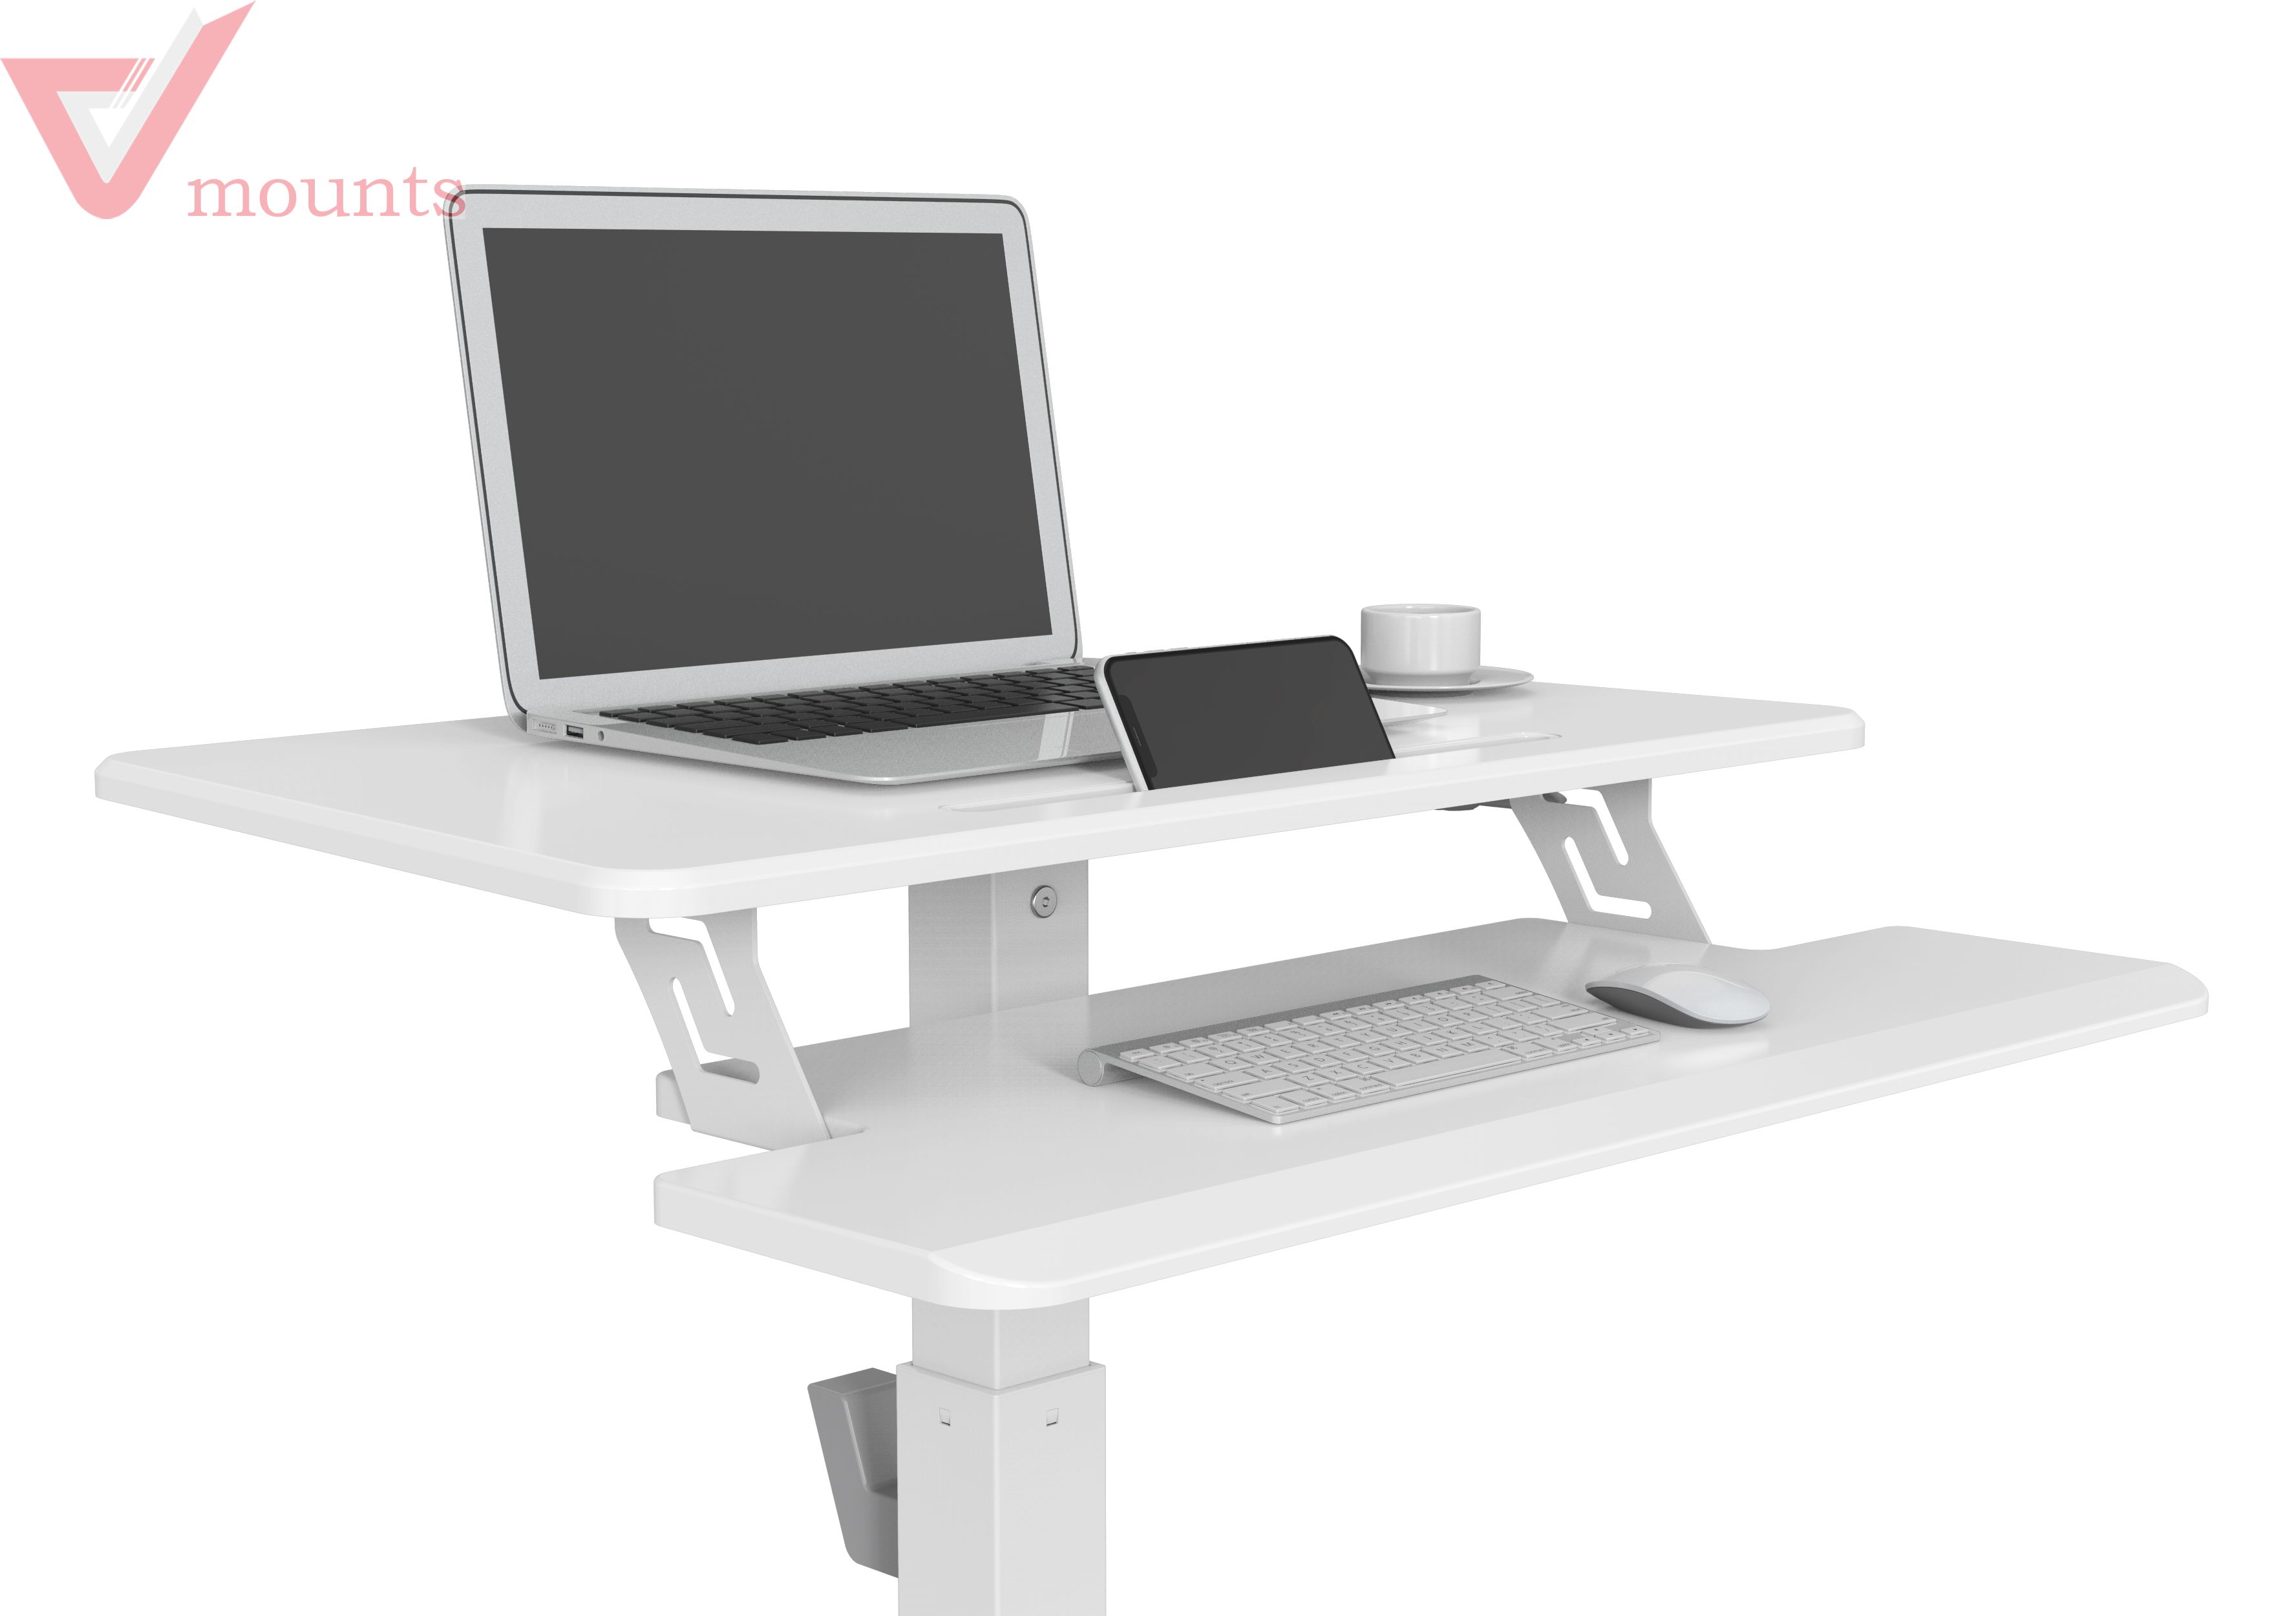 V-mounts Movable Office Desk